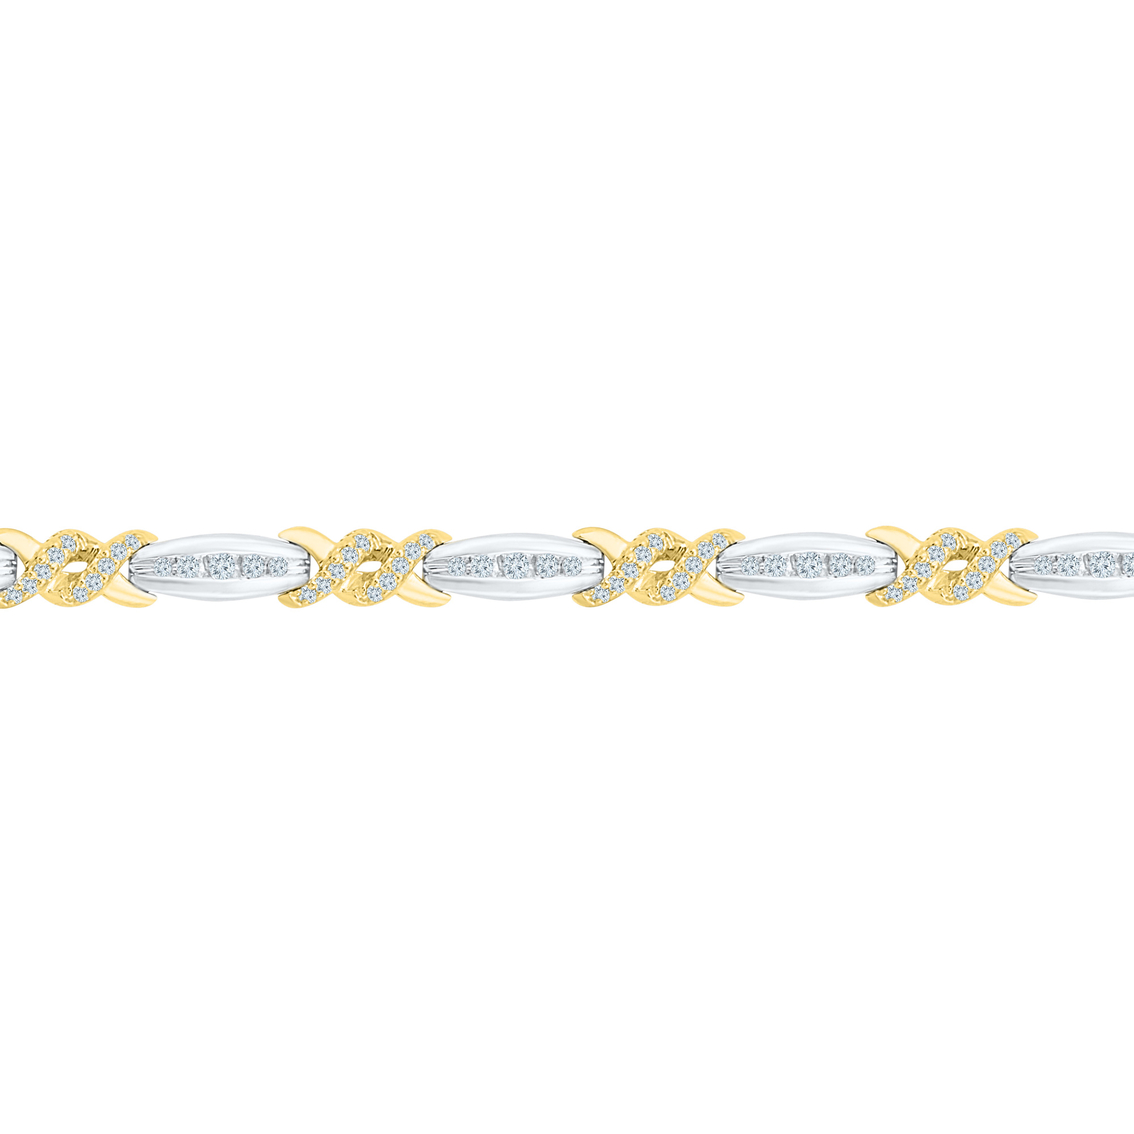 10K White and Gold 1 CTW Diamond Fashion Bracelet - Image 2 of 2